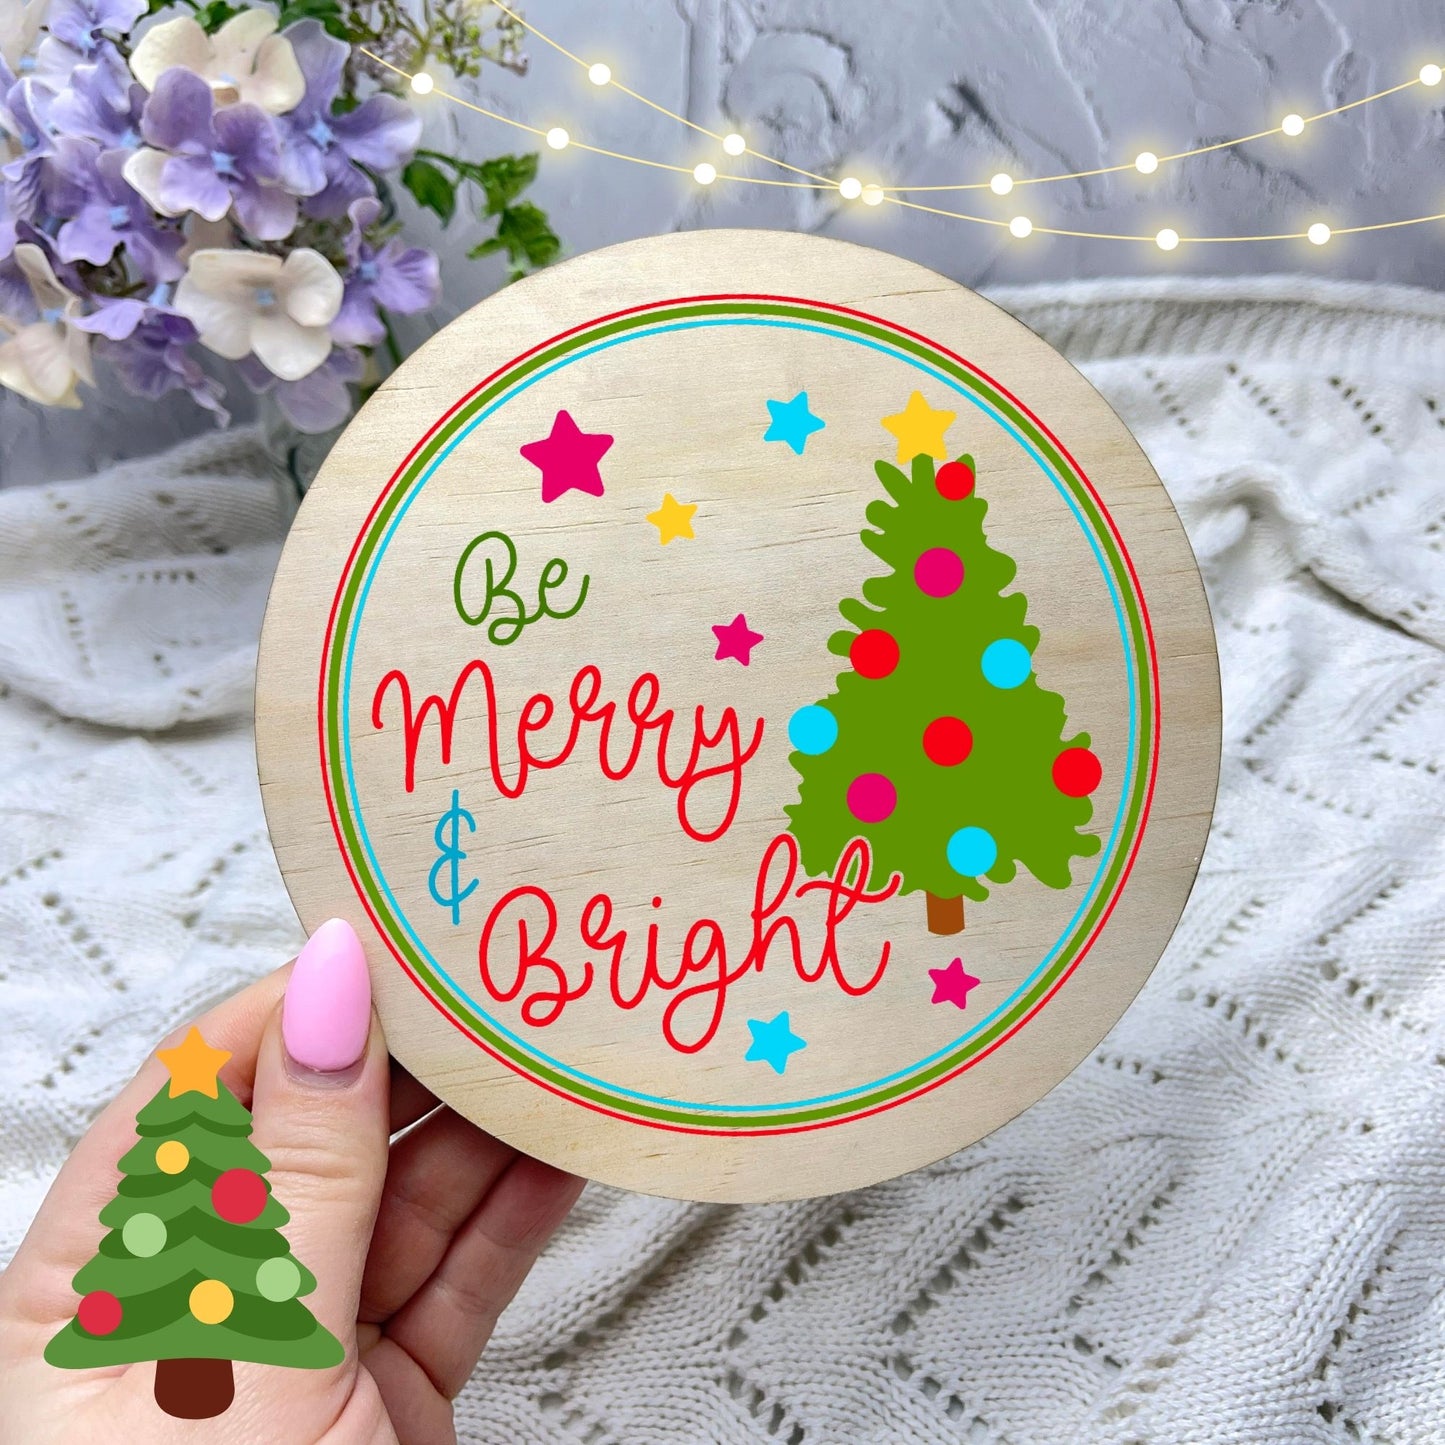 Be Merry and Bright Sign, Seasonal Decor, Holidays decor, Christmas Decor, festive decorations c20